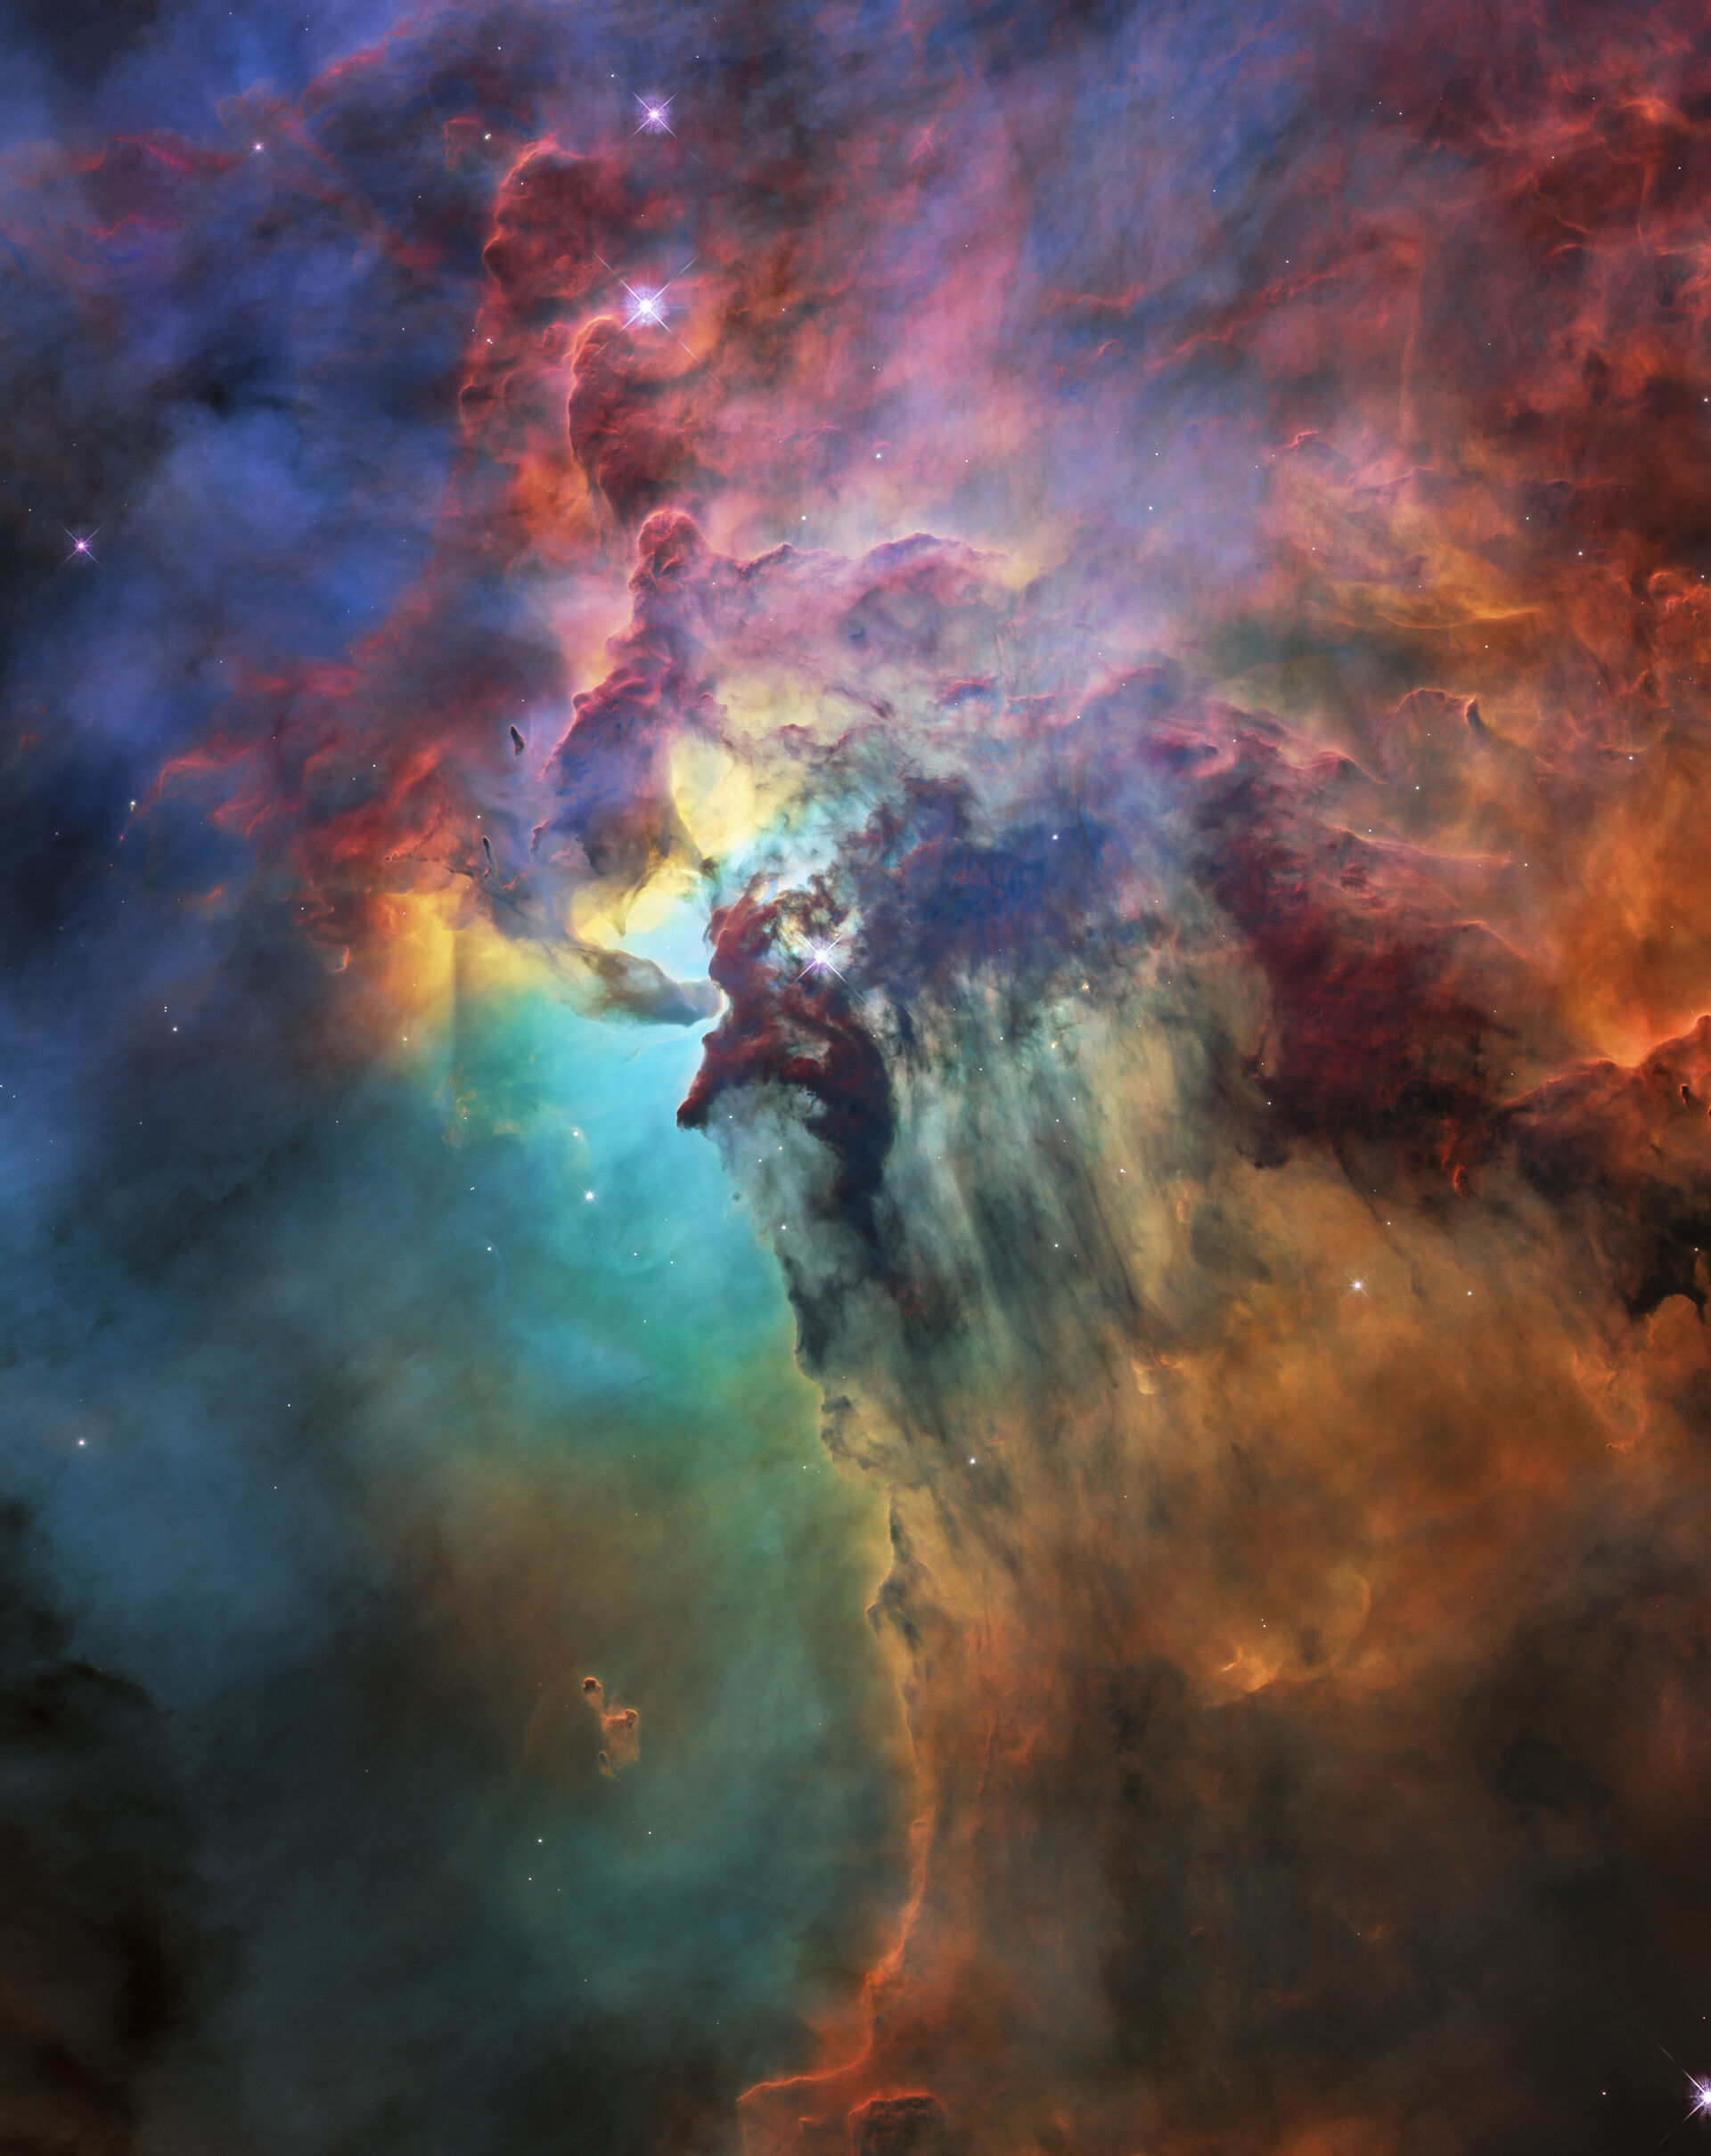 The star forming nebula, Lagoon Nebula in the constellation Sagittarius.